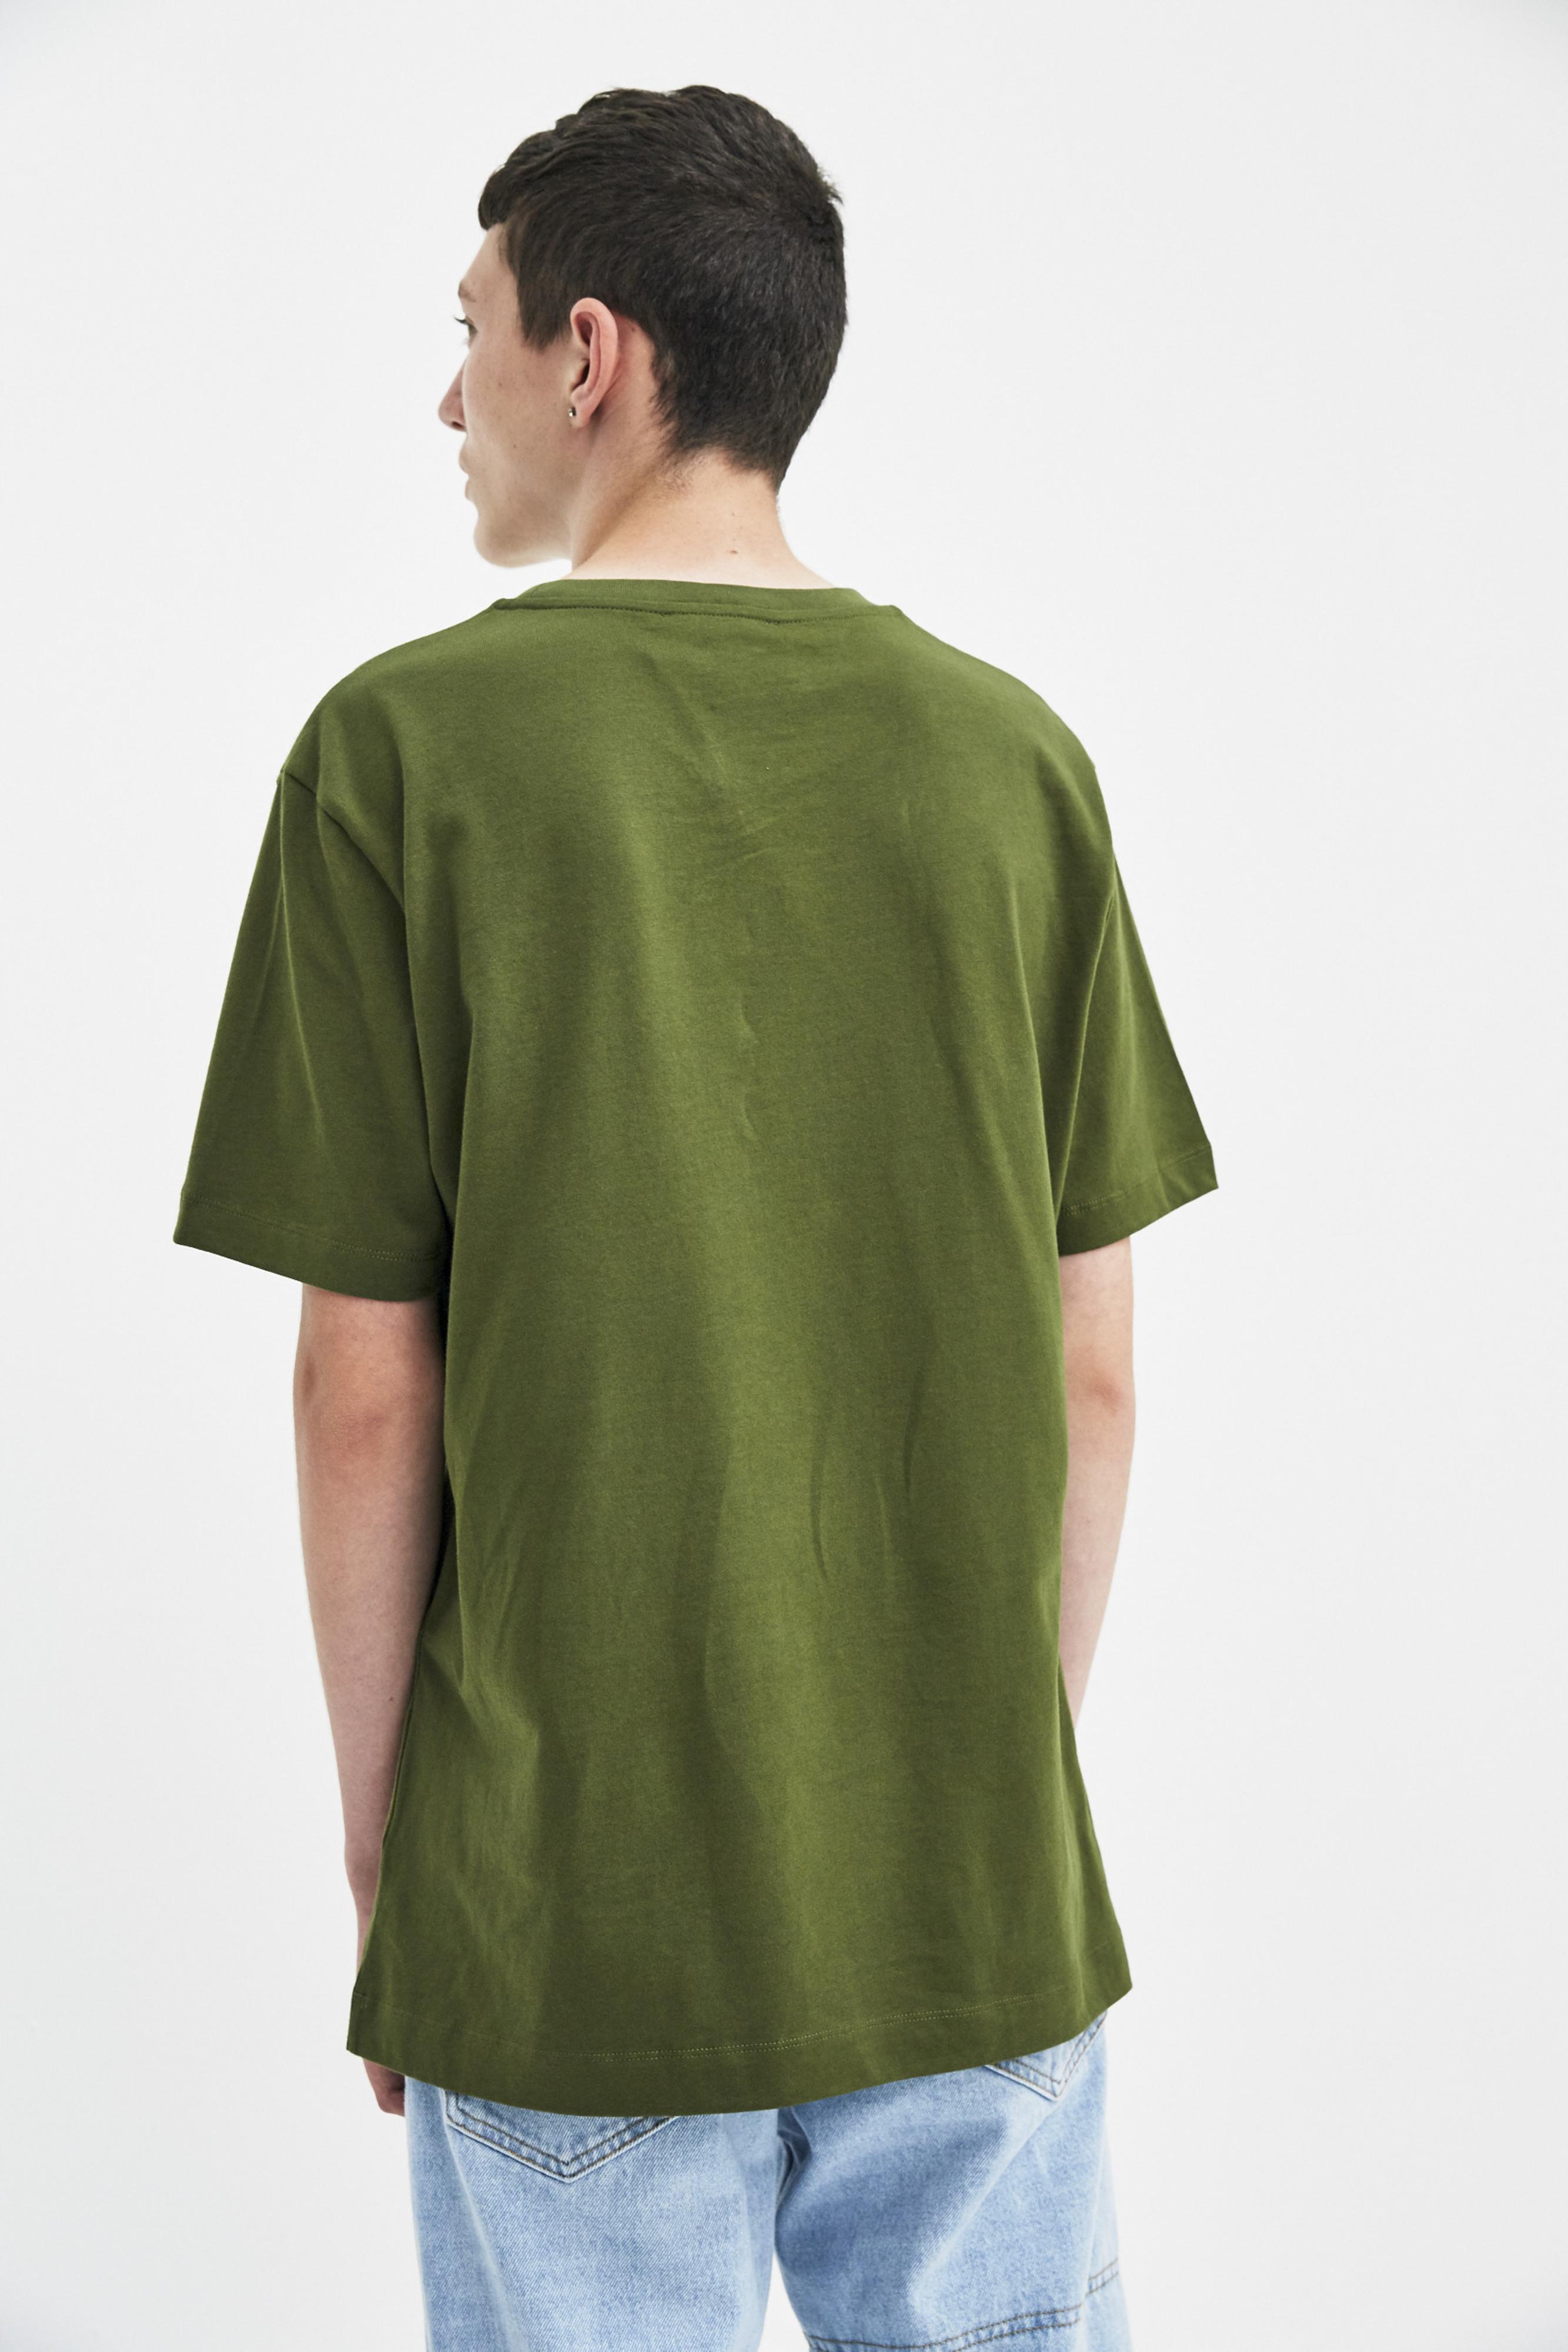 Lyst - Gosha Rubchinskiy Khaki Football Motif T-shirt in Green for Men